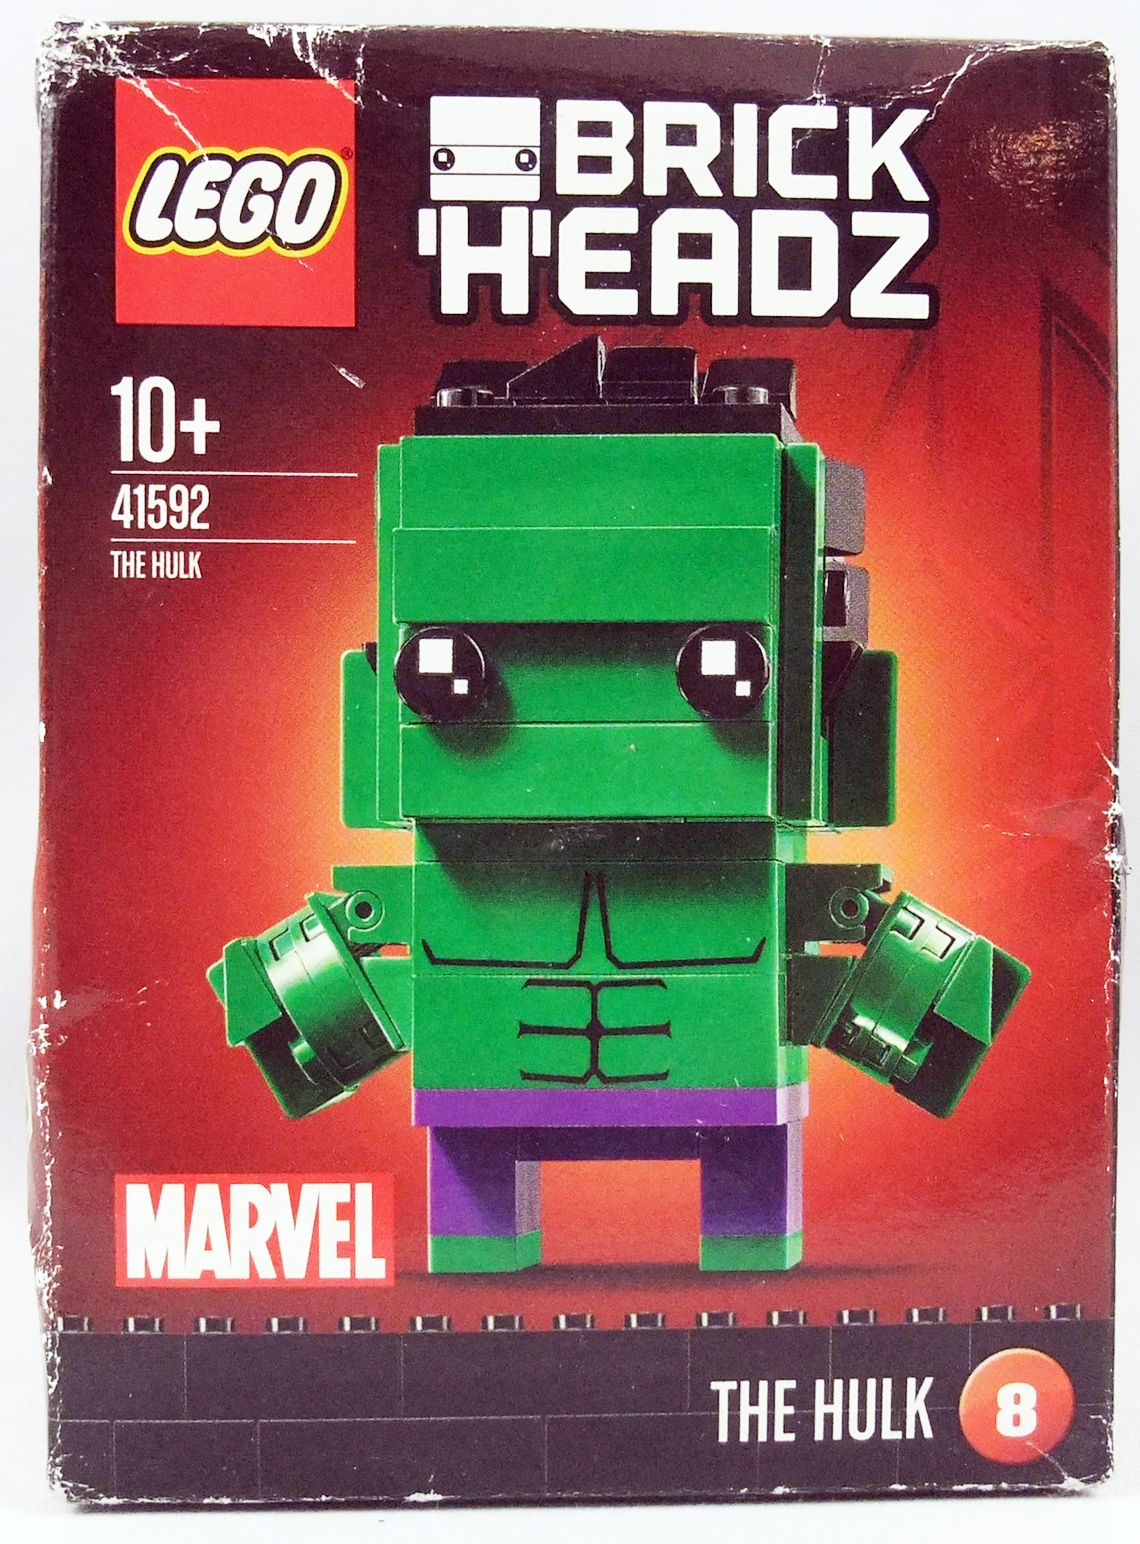 Dum kort Idol LEGO Brick Headz Ref.41592 - The Hulk (Avengers : Age of Ultron)